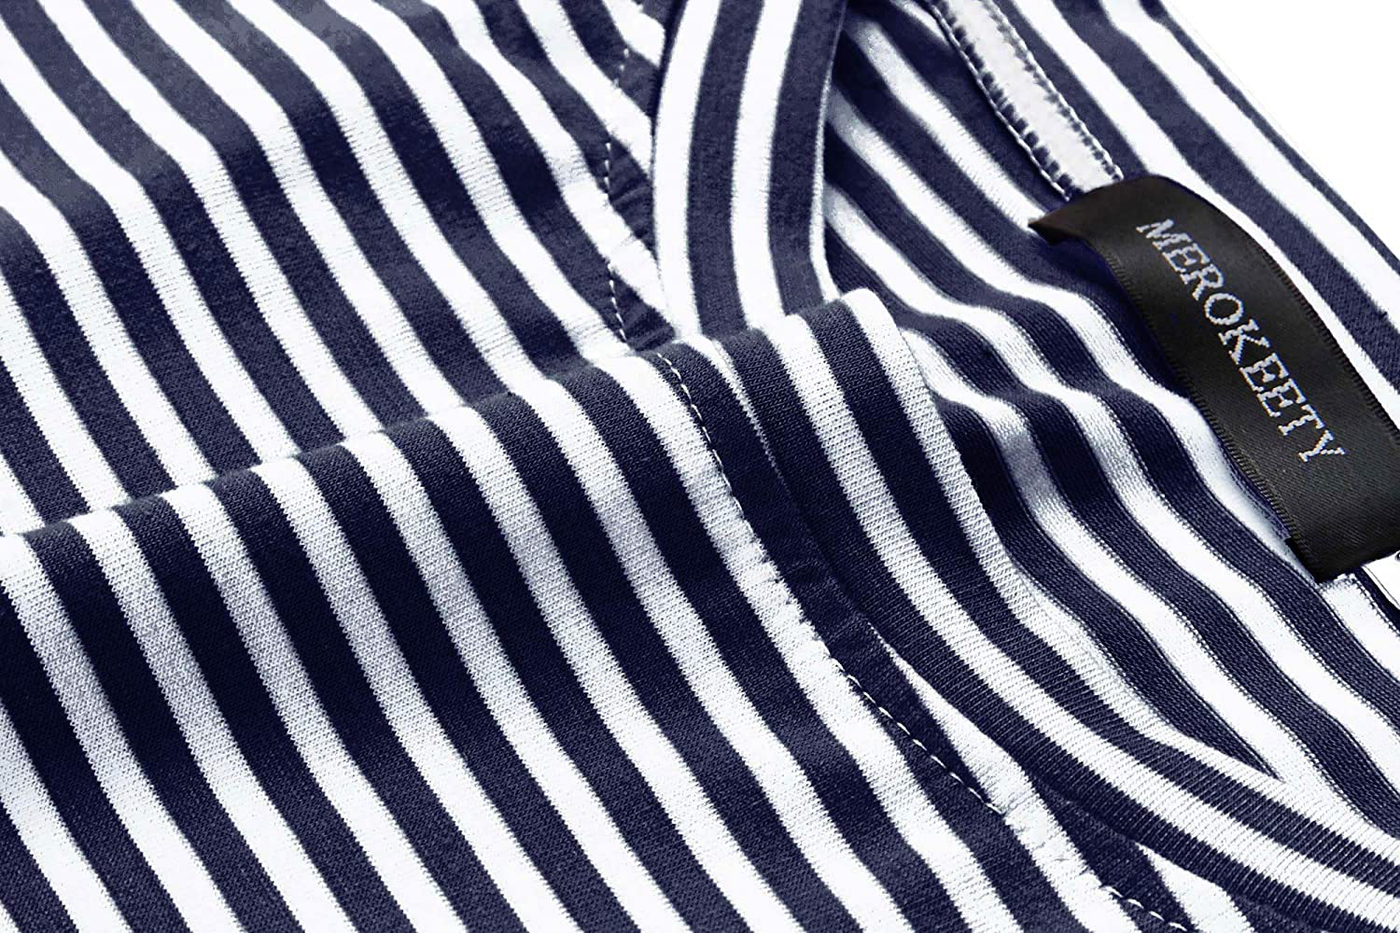 MEROKEETY Women's Summer Striped Short Sleeve T Shirt Dress Casual Tie Waist Midi Dress